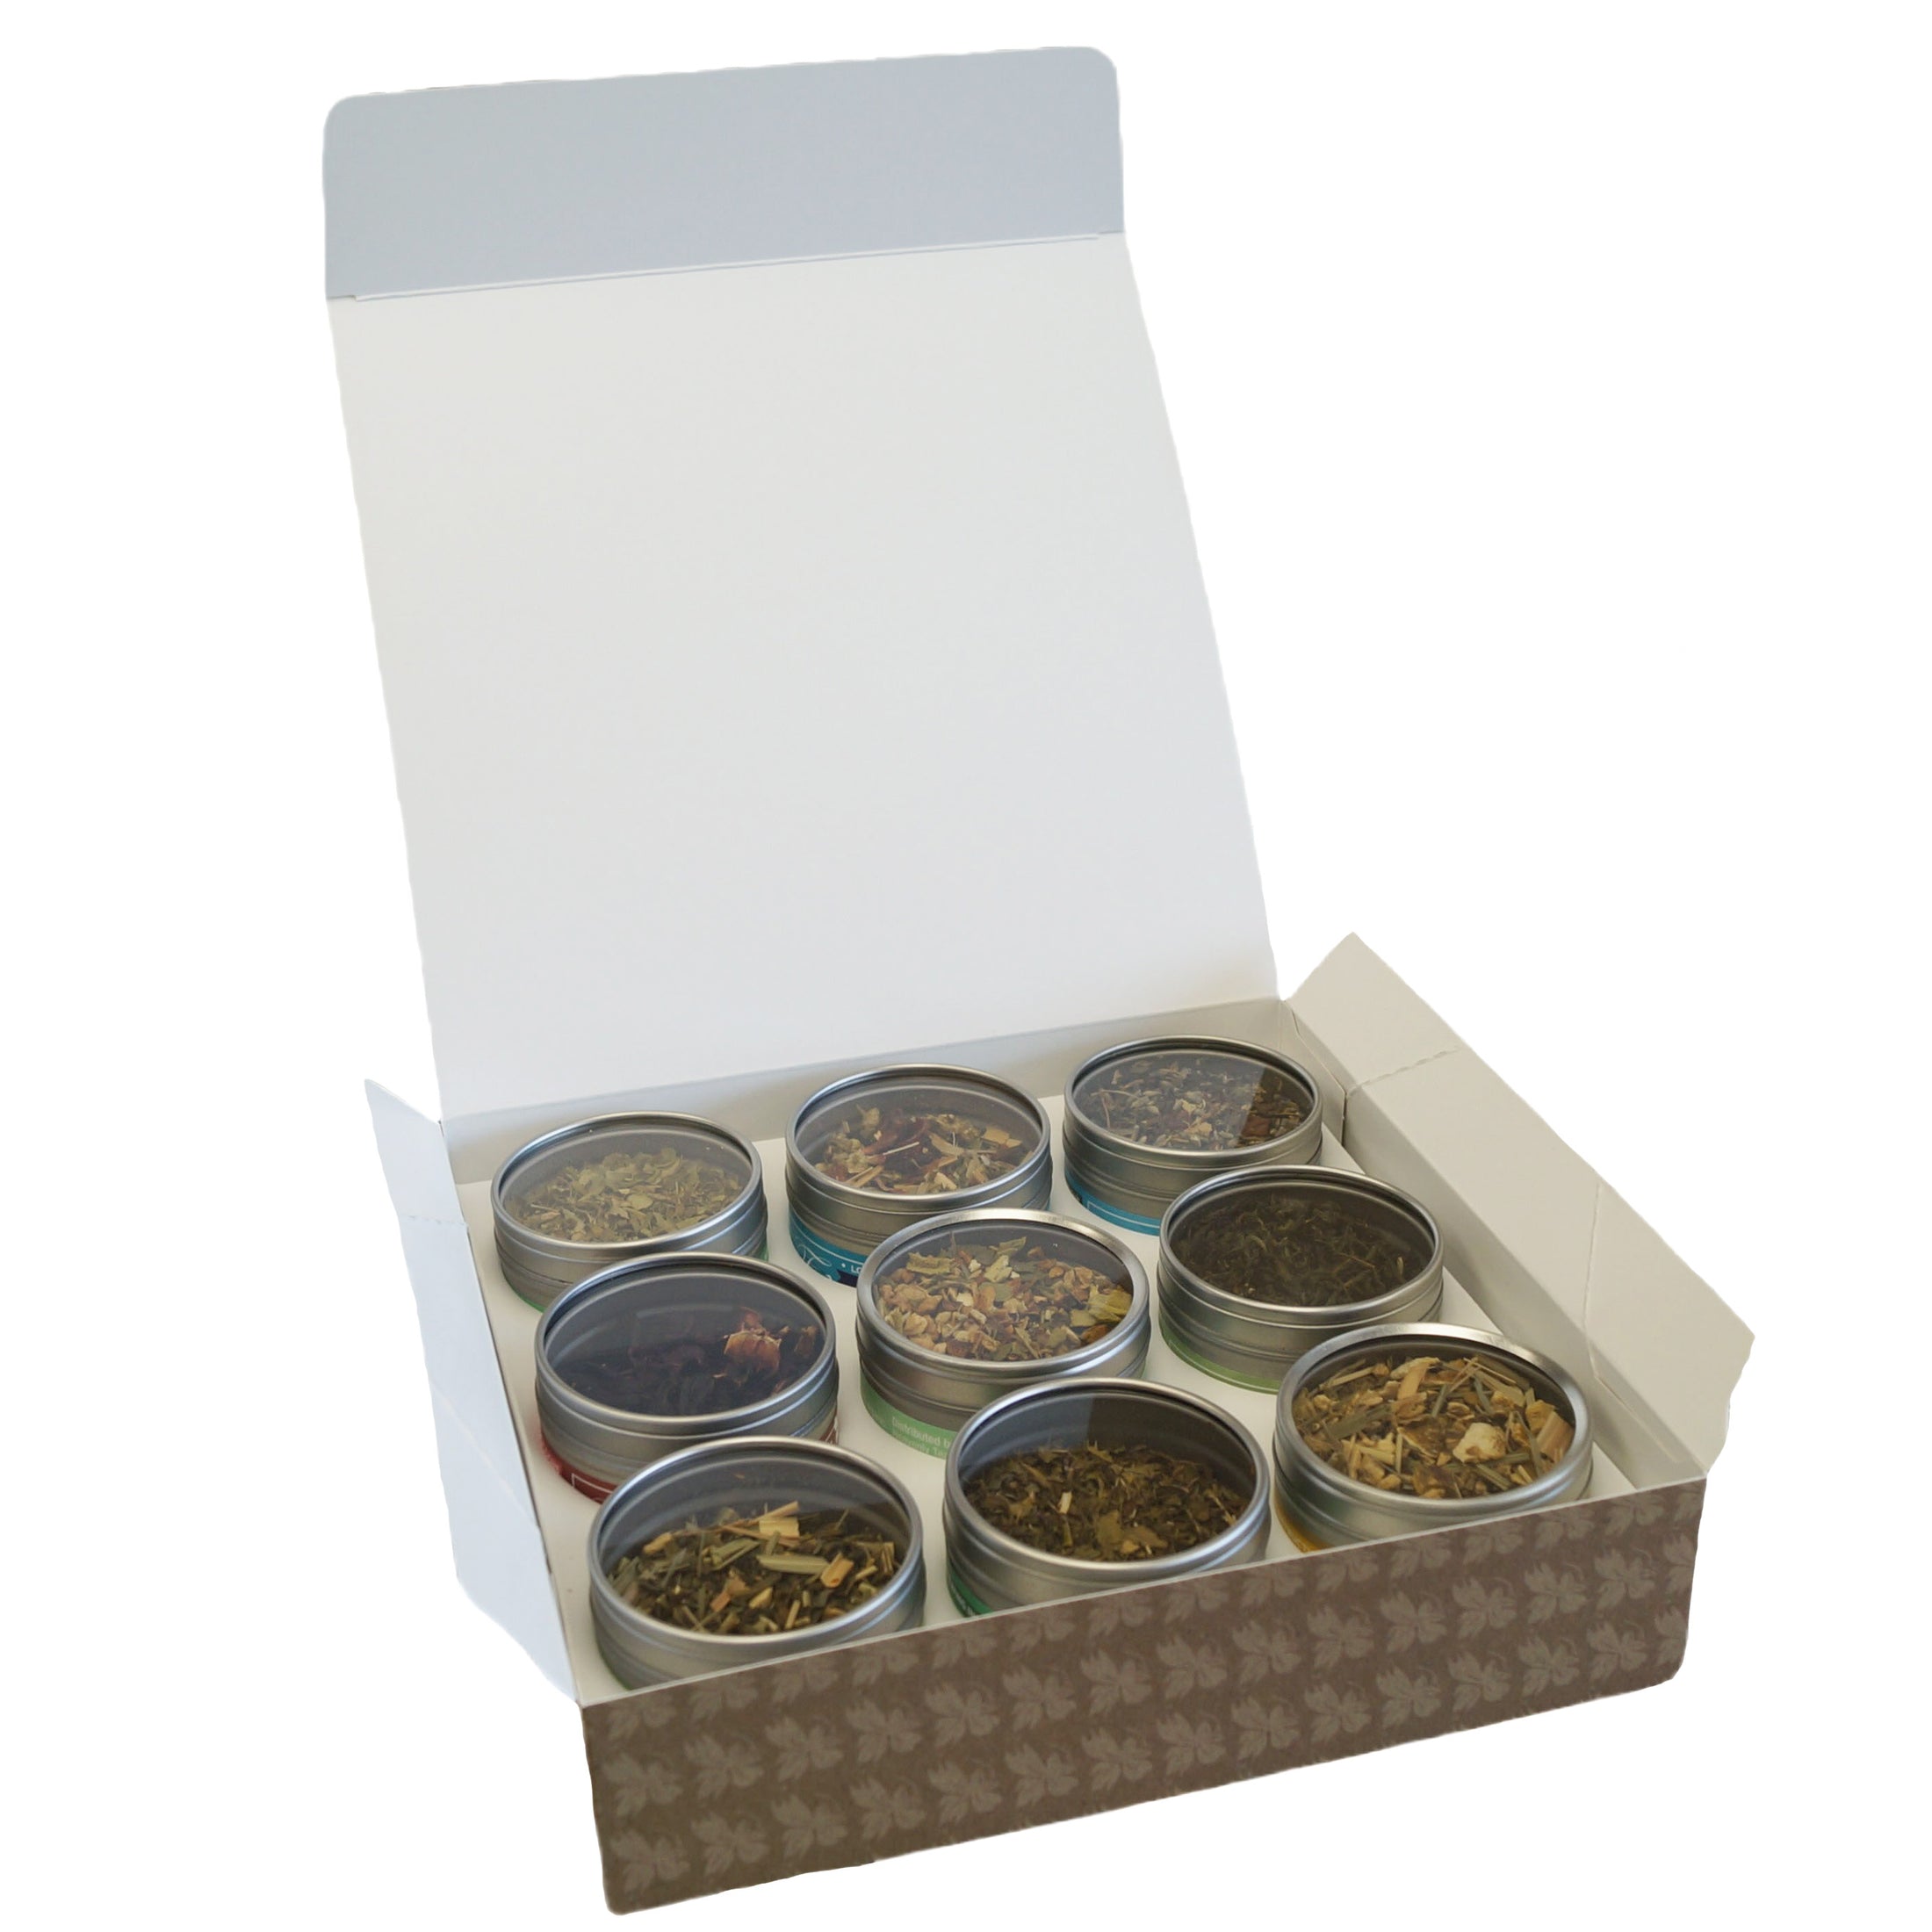 Organic Wellness 9 Tea Sampler, 9 Assorted Wellness Loose Leaf Teas & Herbal Tisanes, - Beautiful Gift for Mom, Grandma, or Her, | Heavenly Tea Leaves